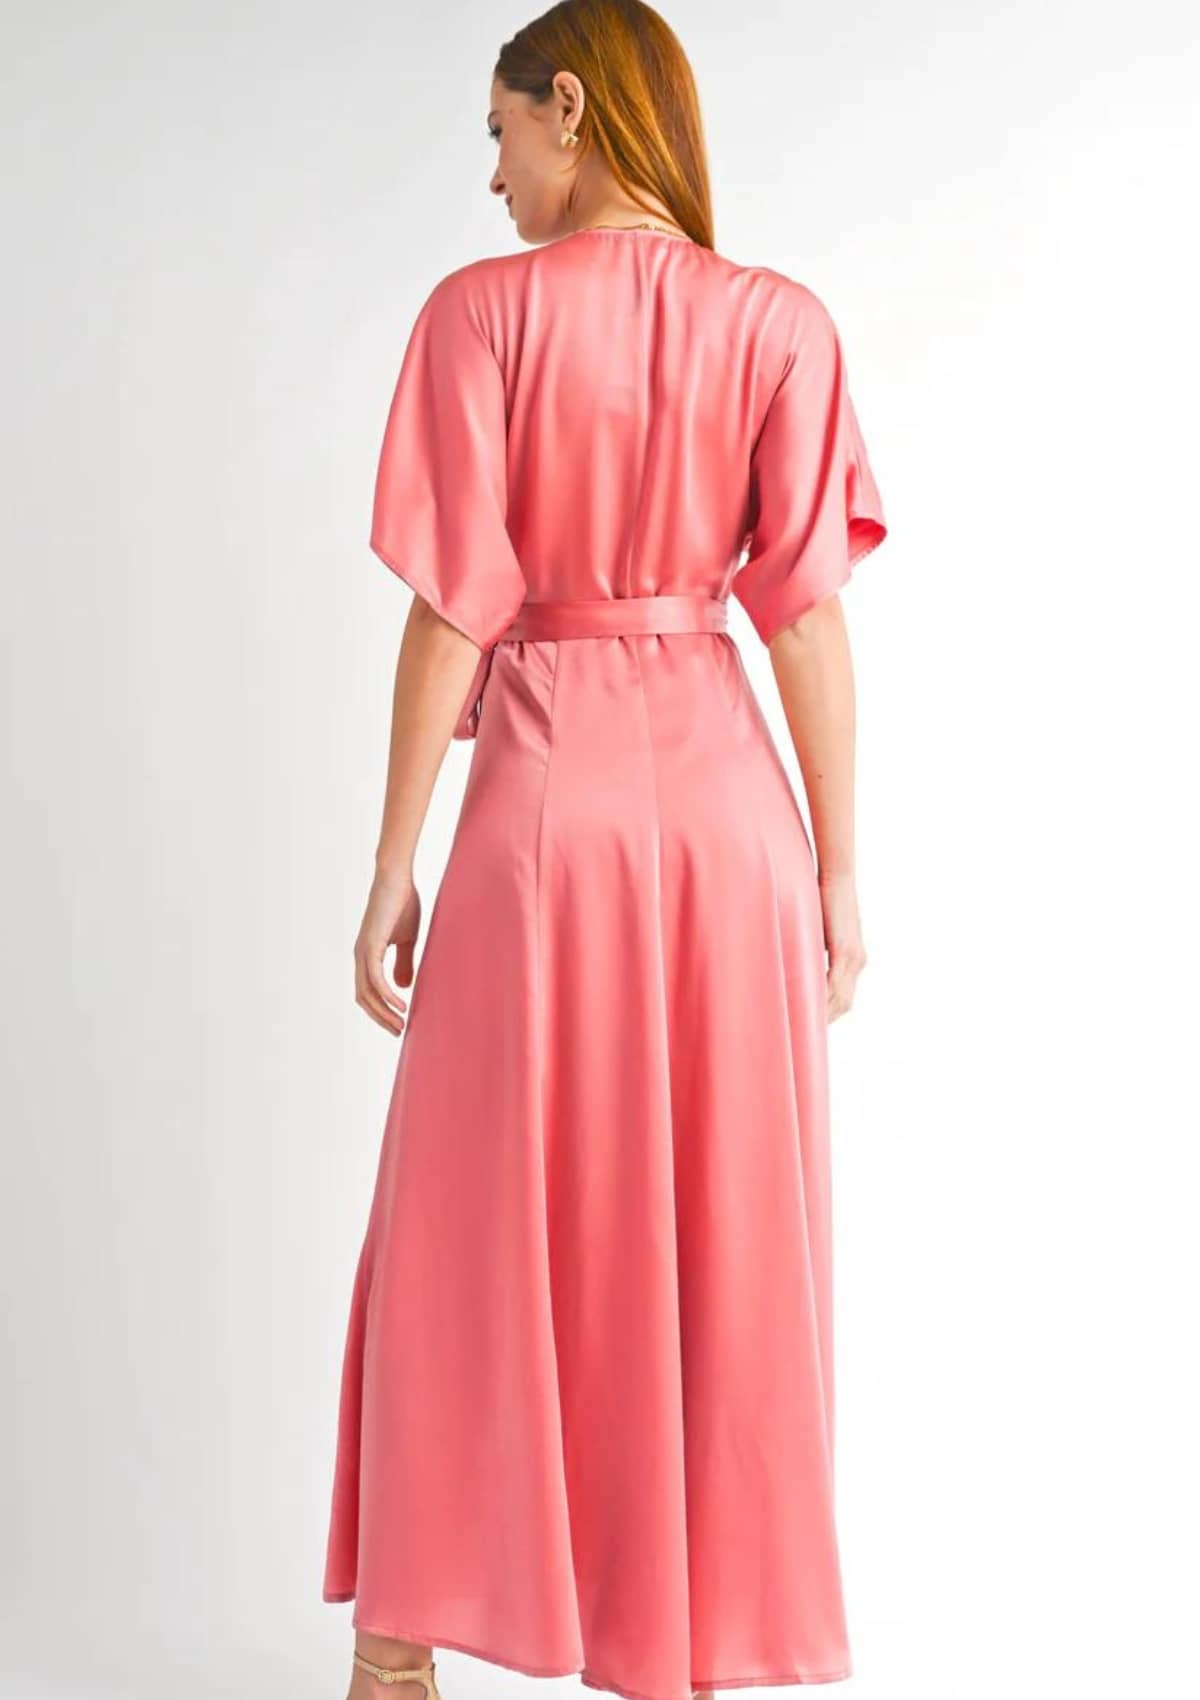 Clothing-Dresses-Fashion-Ruby Jane.